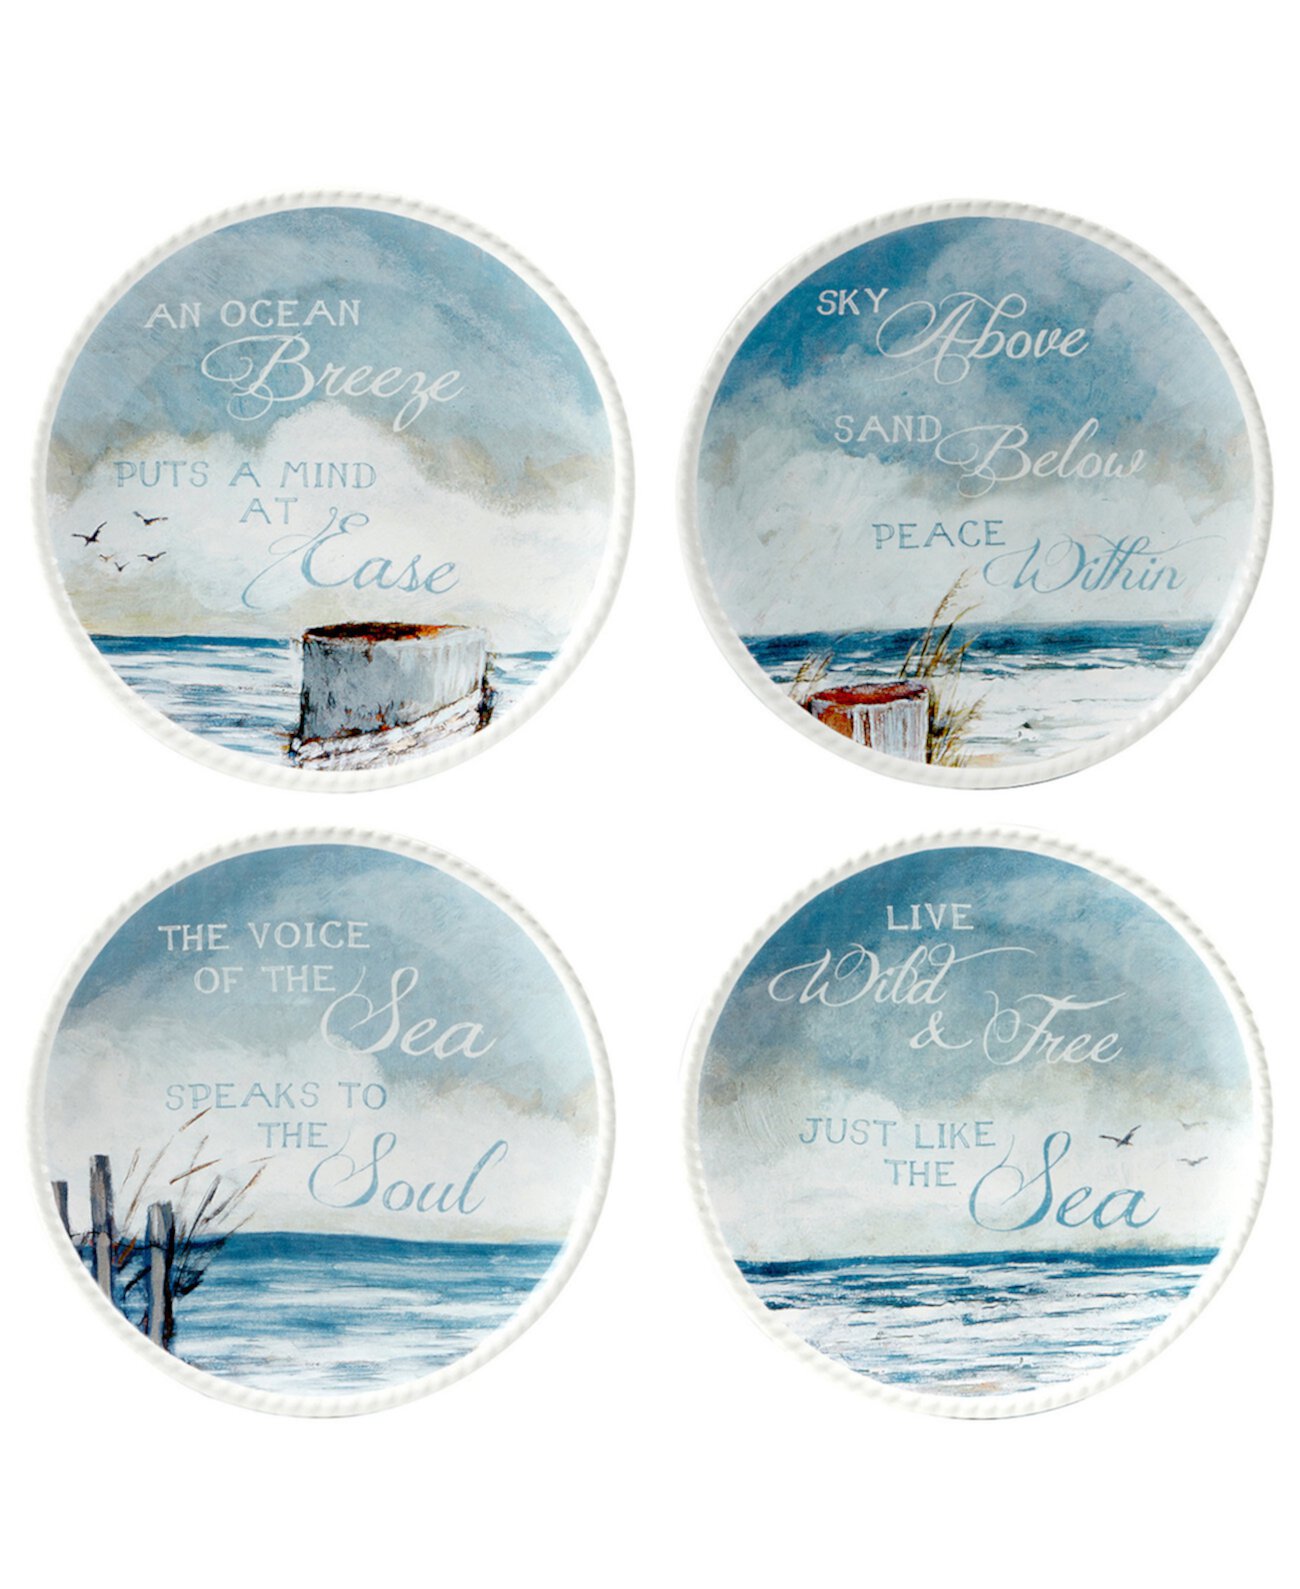 Тарелки для канапе Shorebirds, набор из 4 шт. Certified International